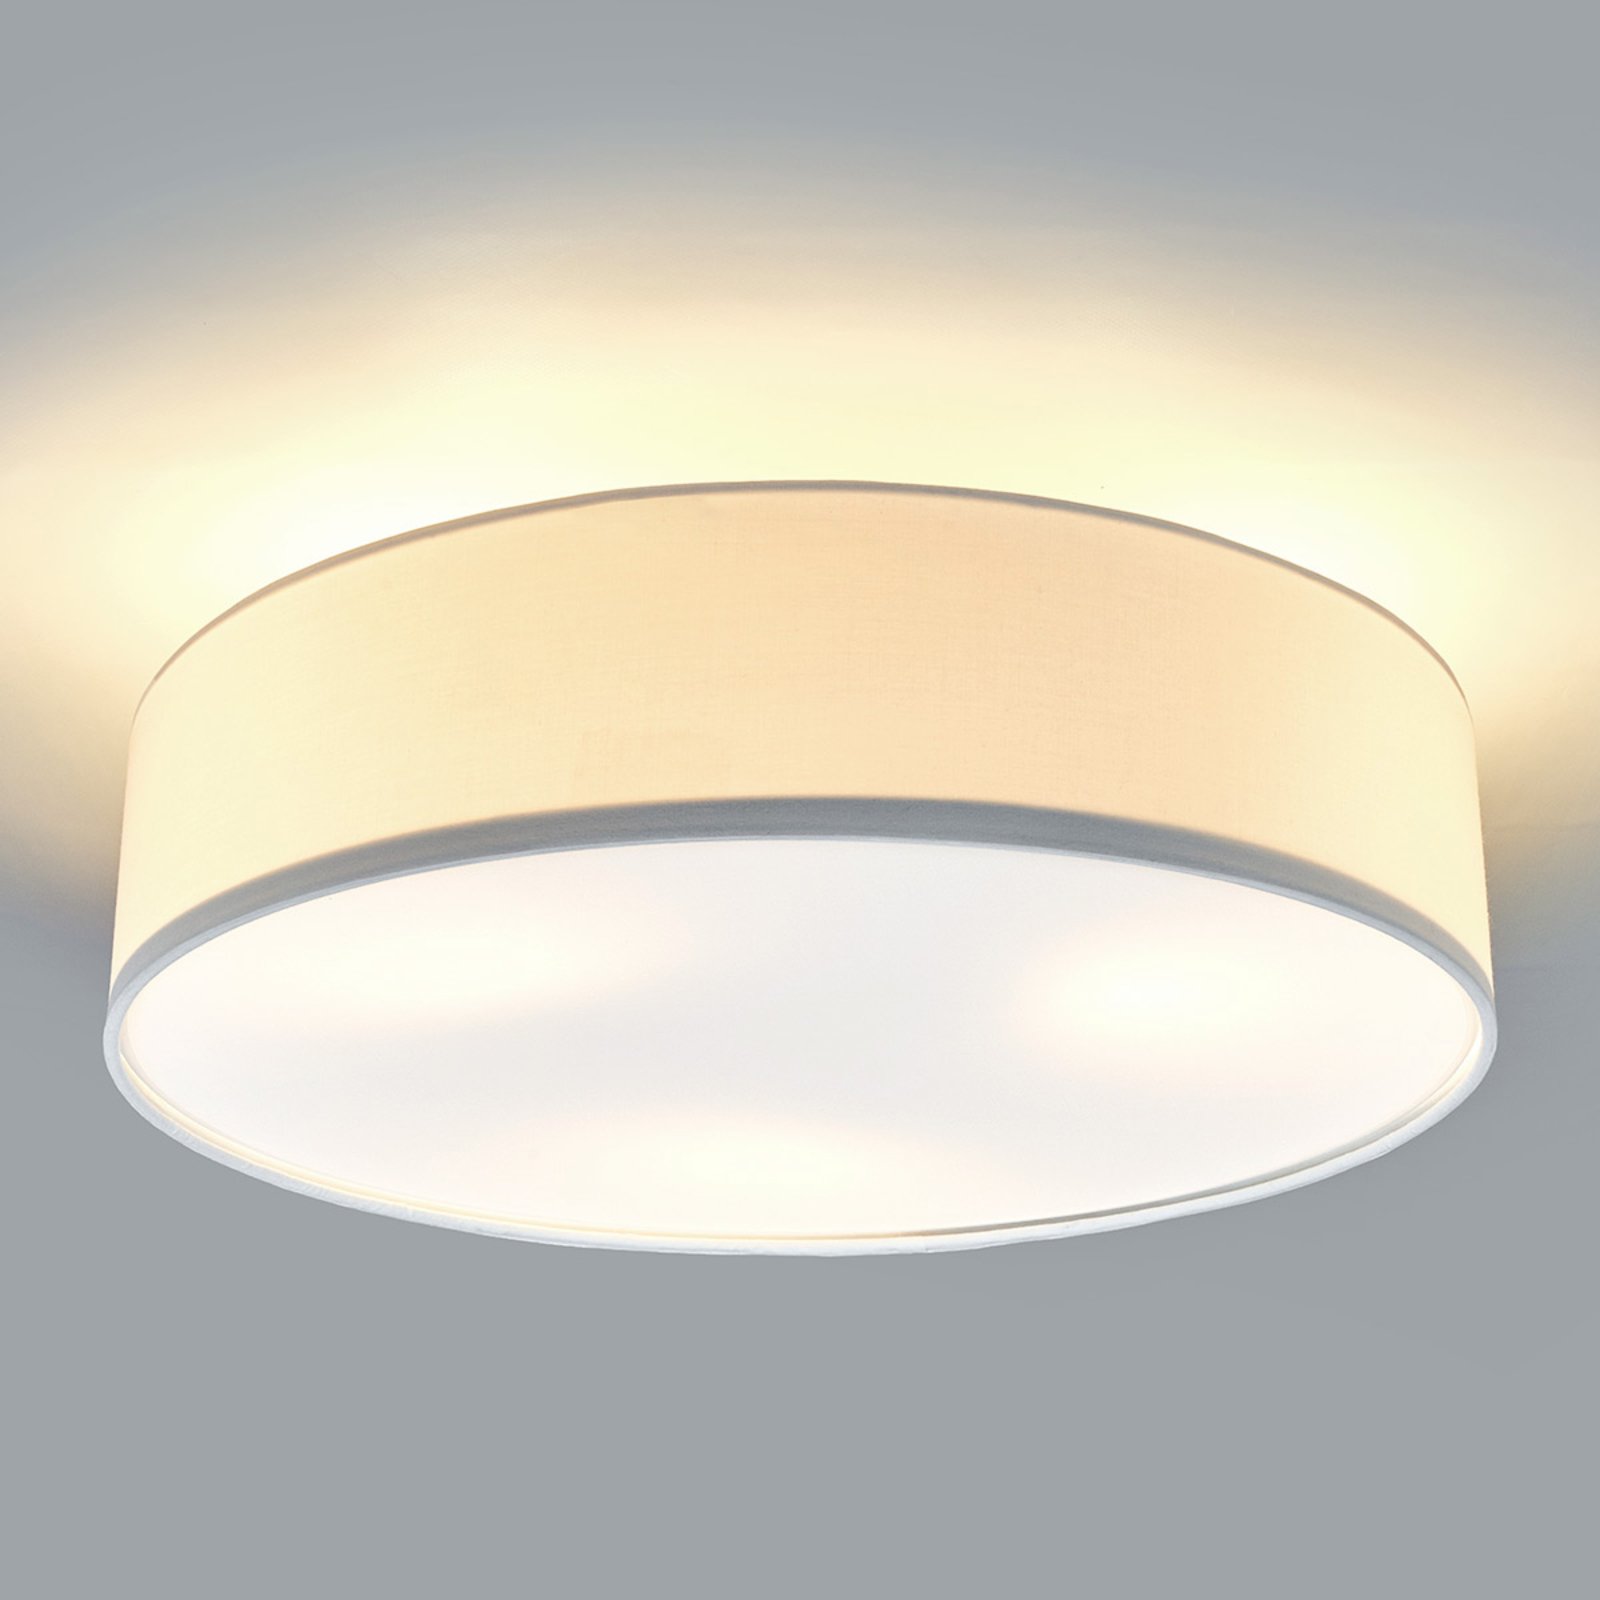 Plafondlamp Sebatin voor E27, 50 cm, crème